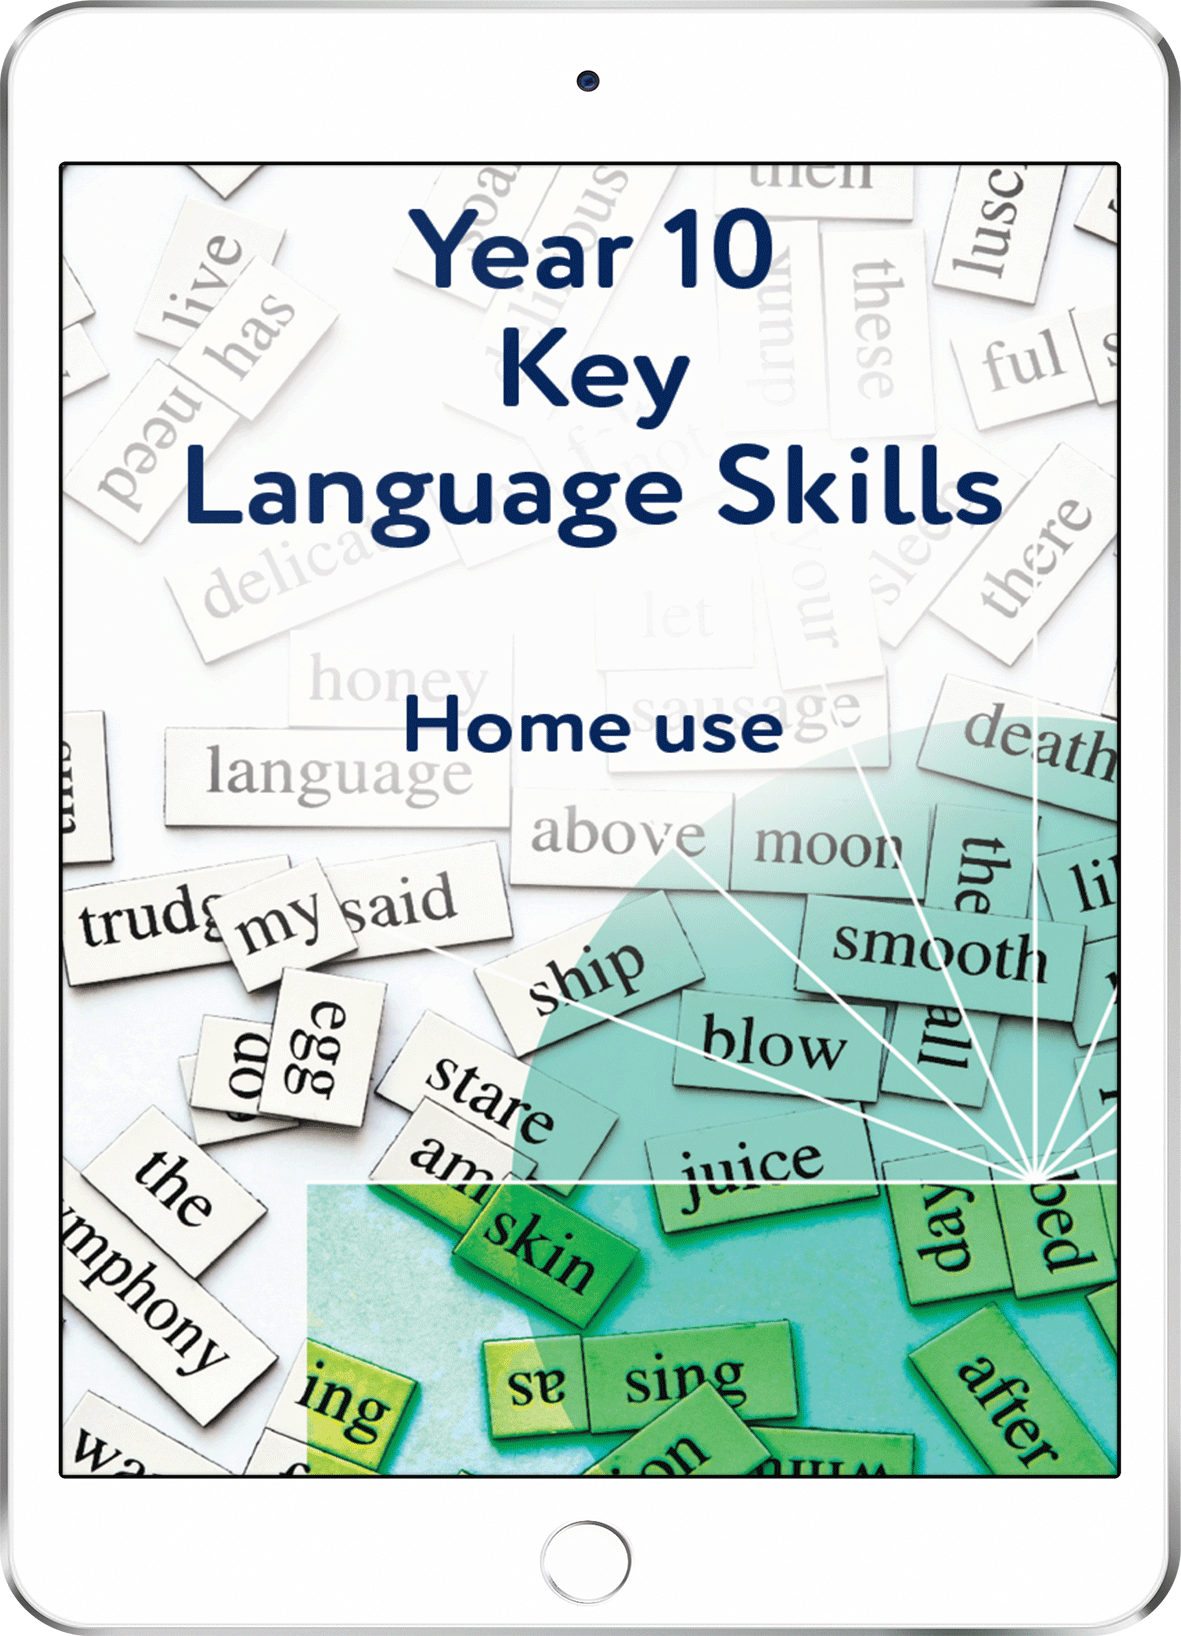 Year 10 Key Language Skills - Home Use